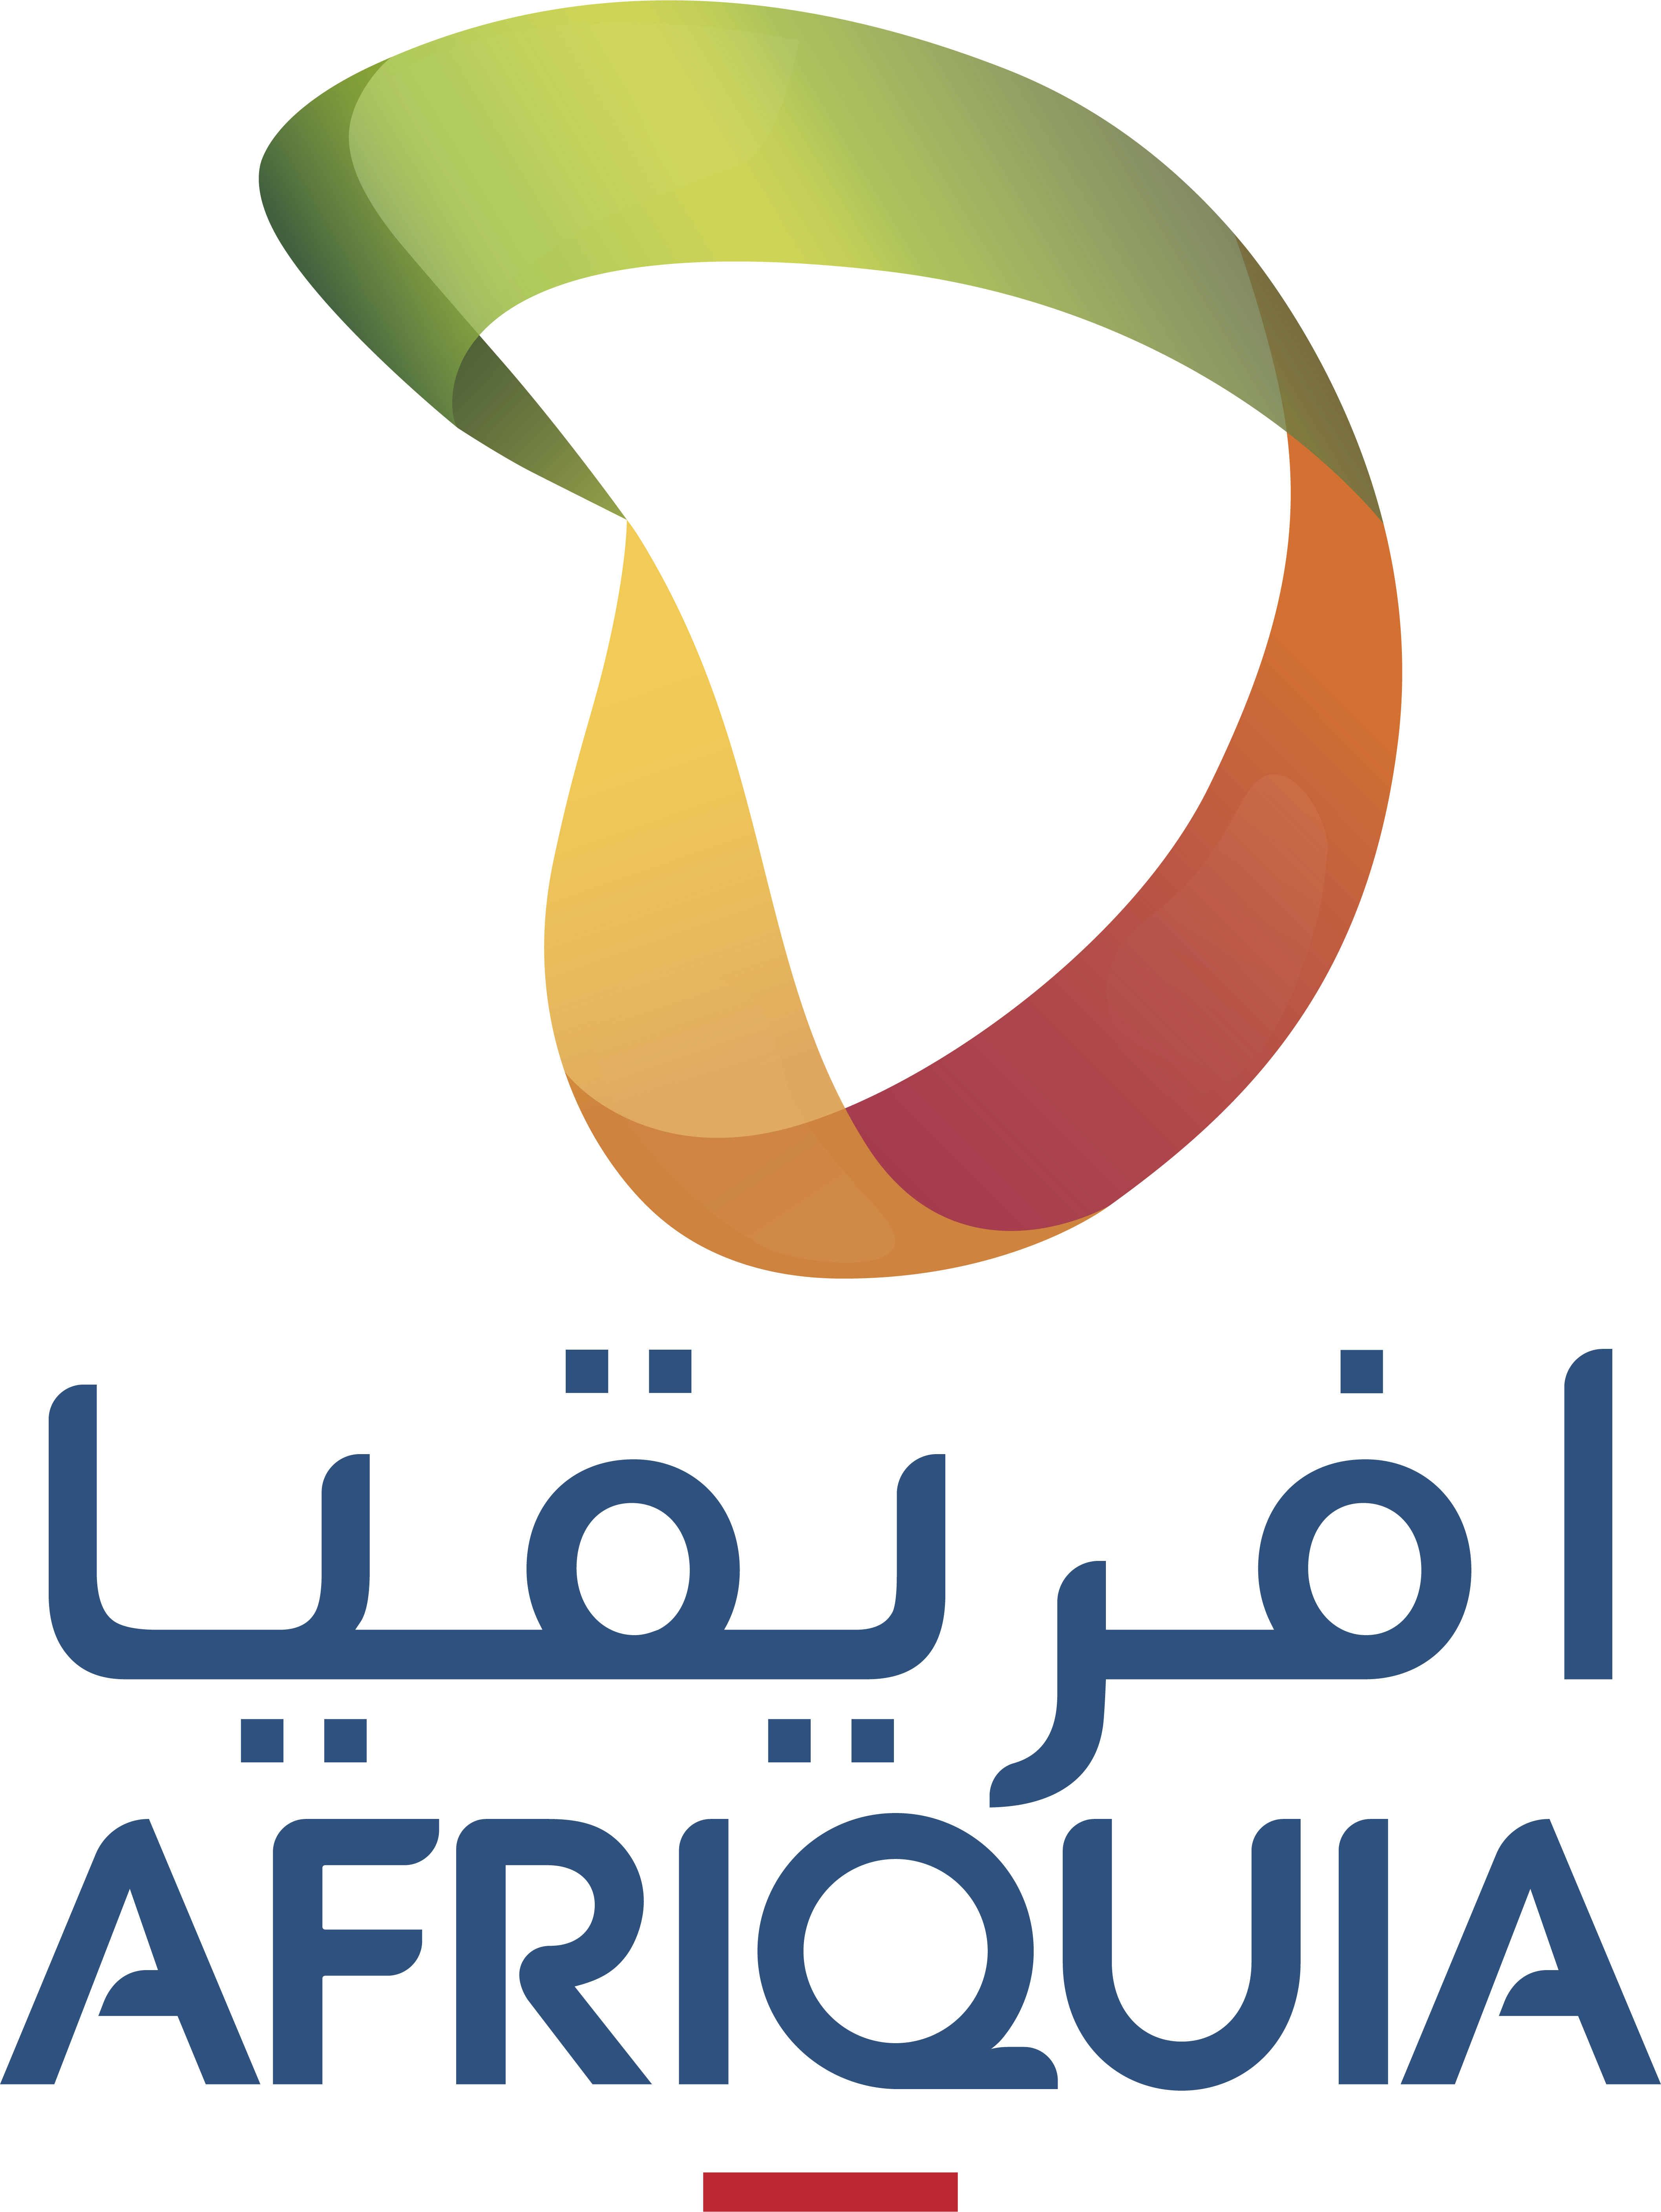 Societe afriquia marocaine de distribution de carburants